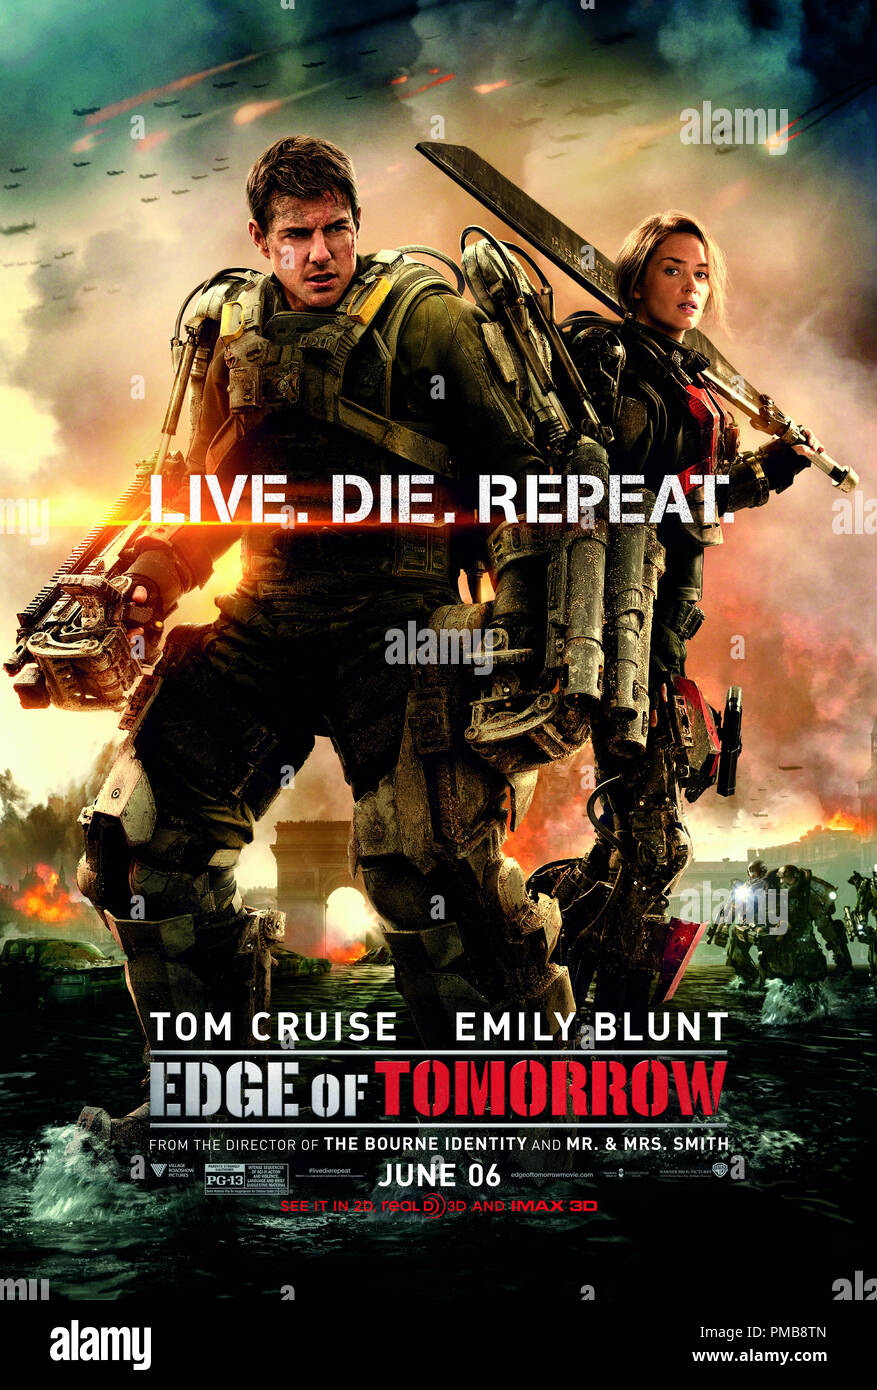 Edge of tomorrow